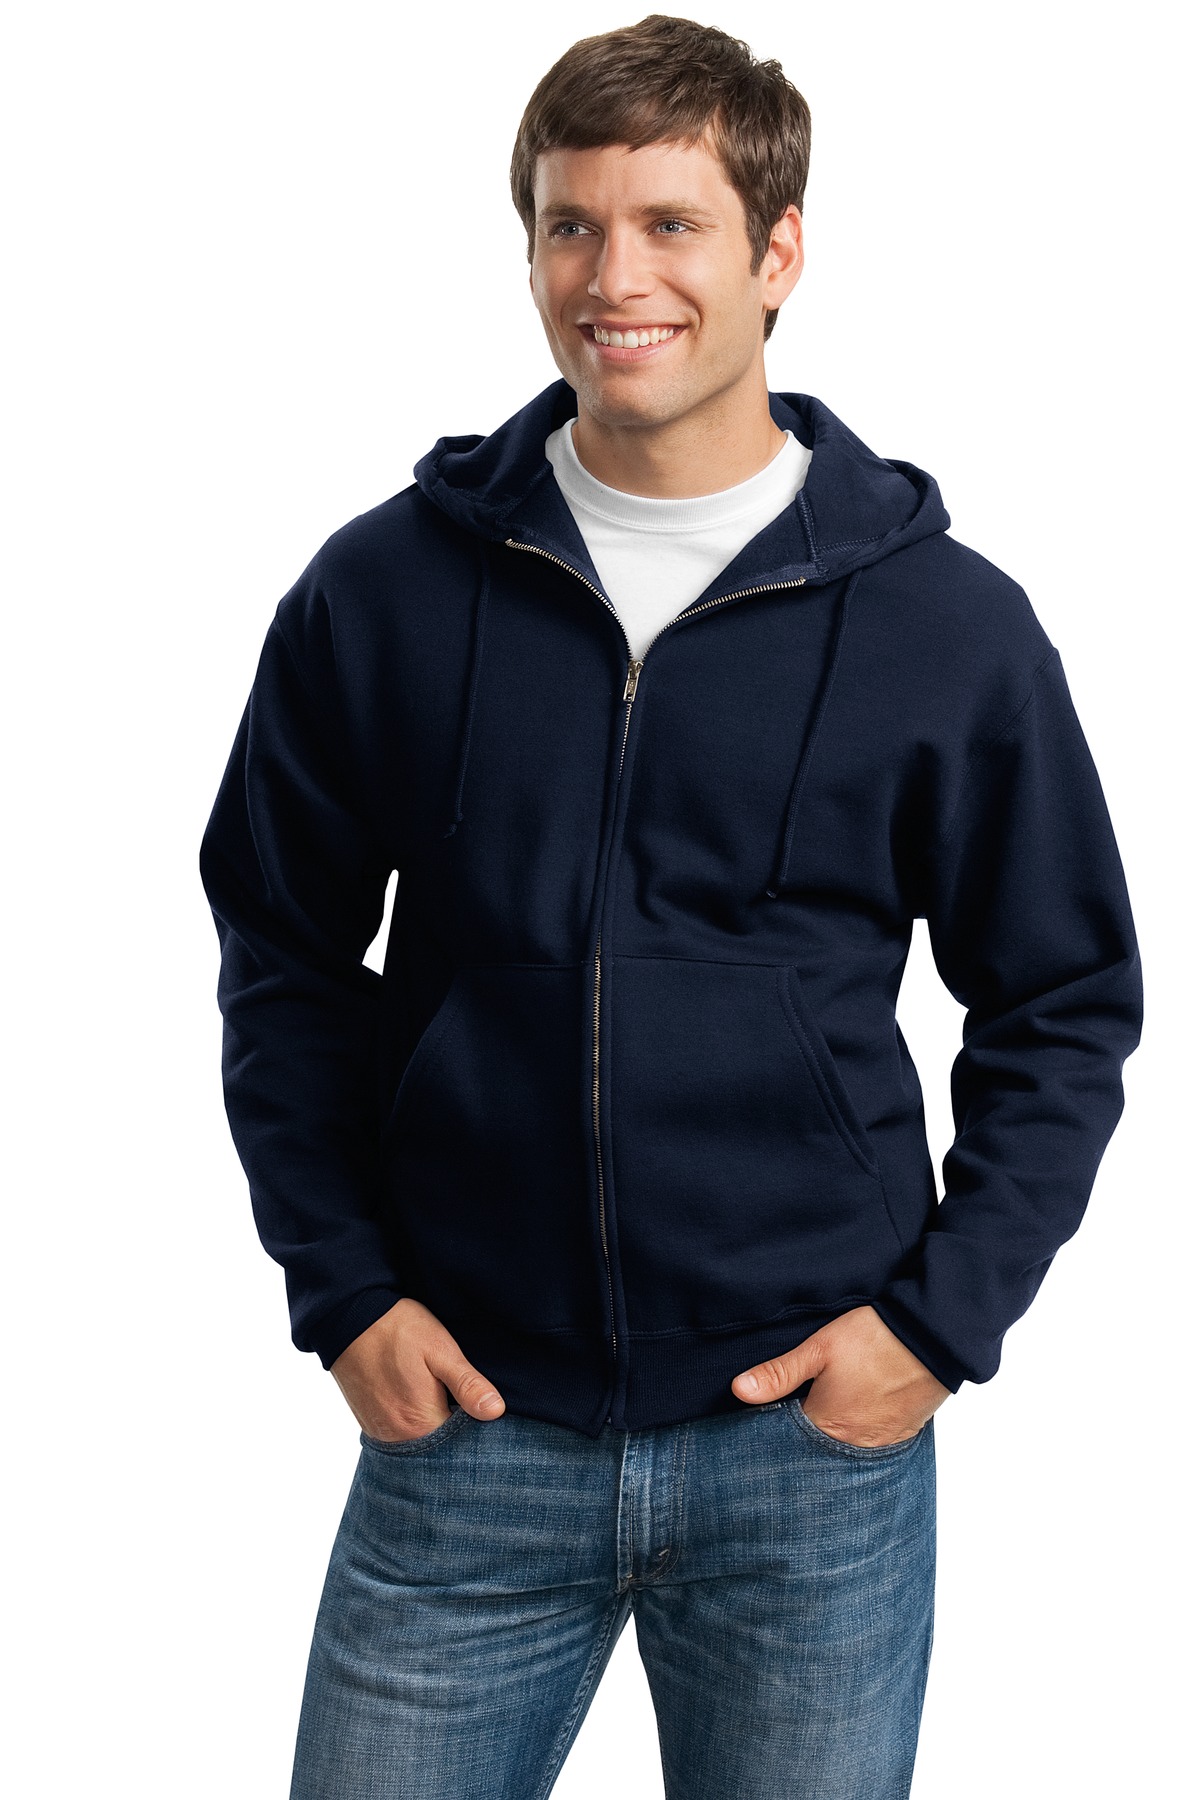 Sweatshirts-Fleece-Full-Zip-7